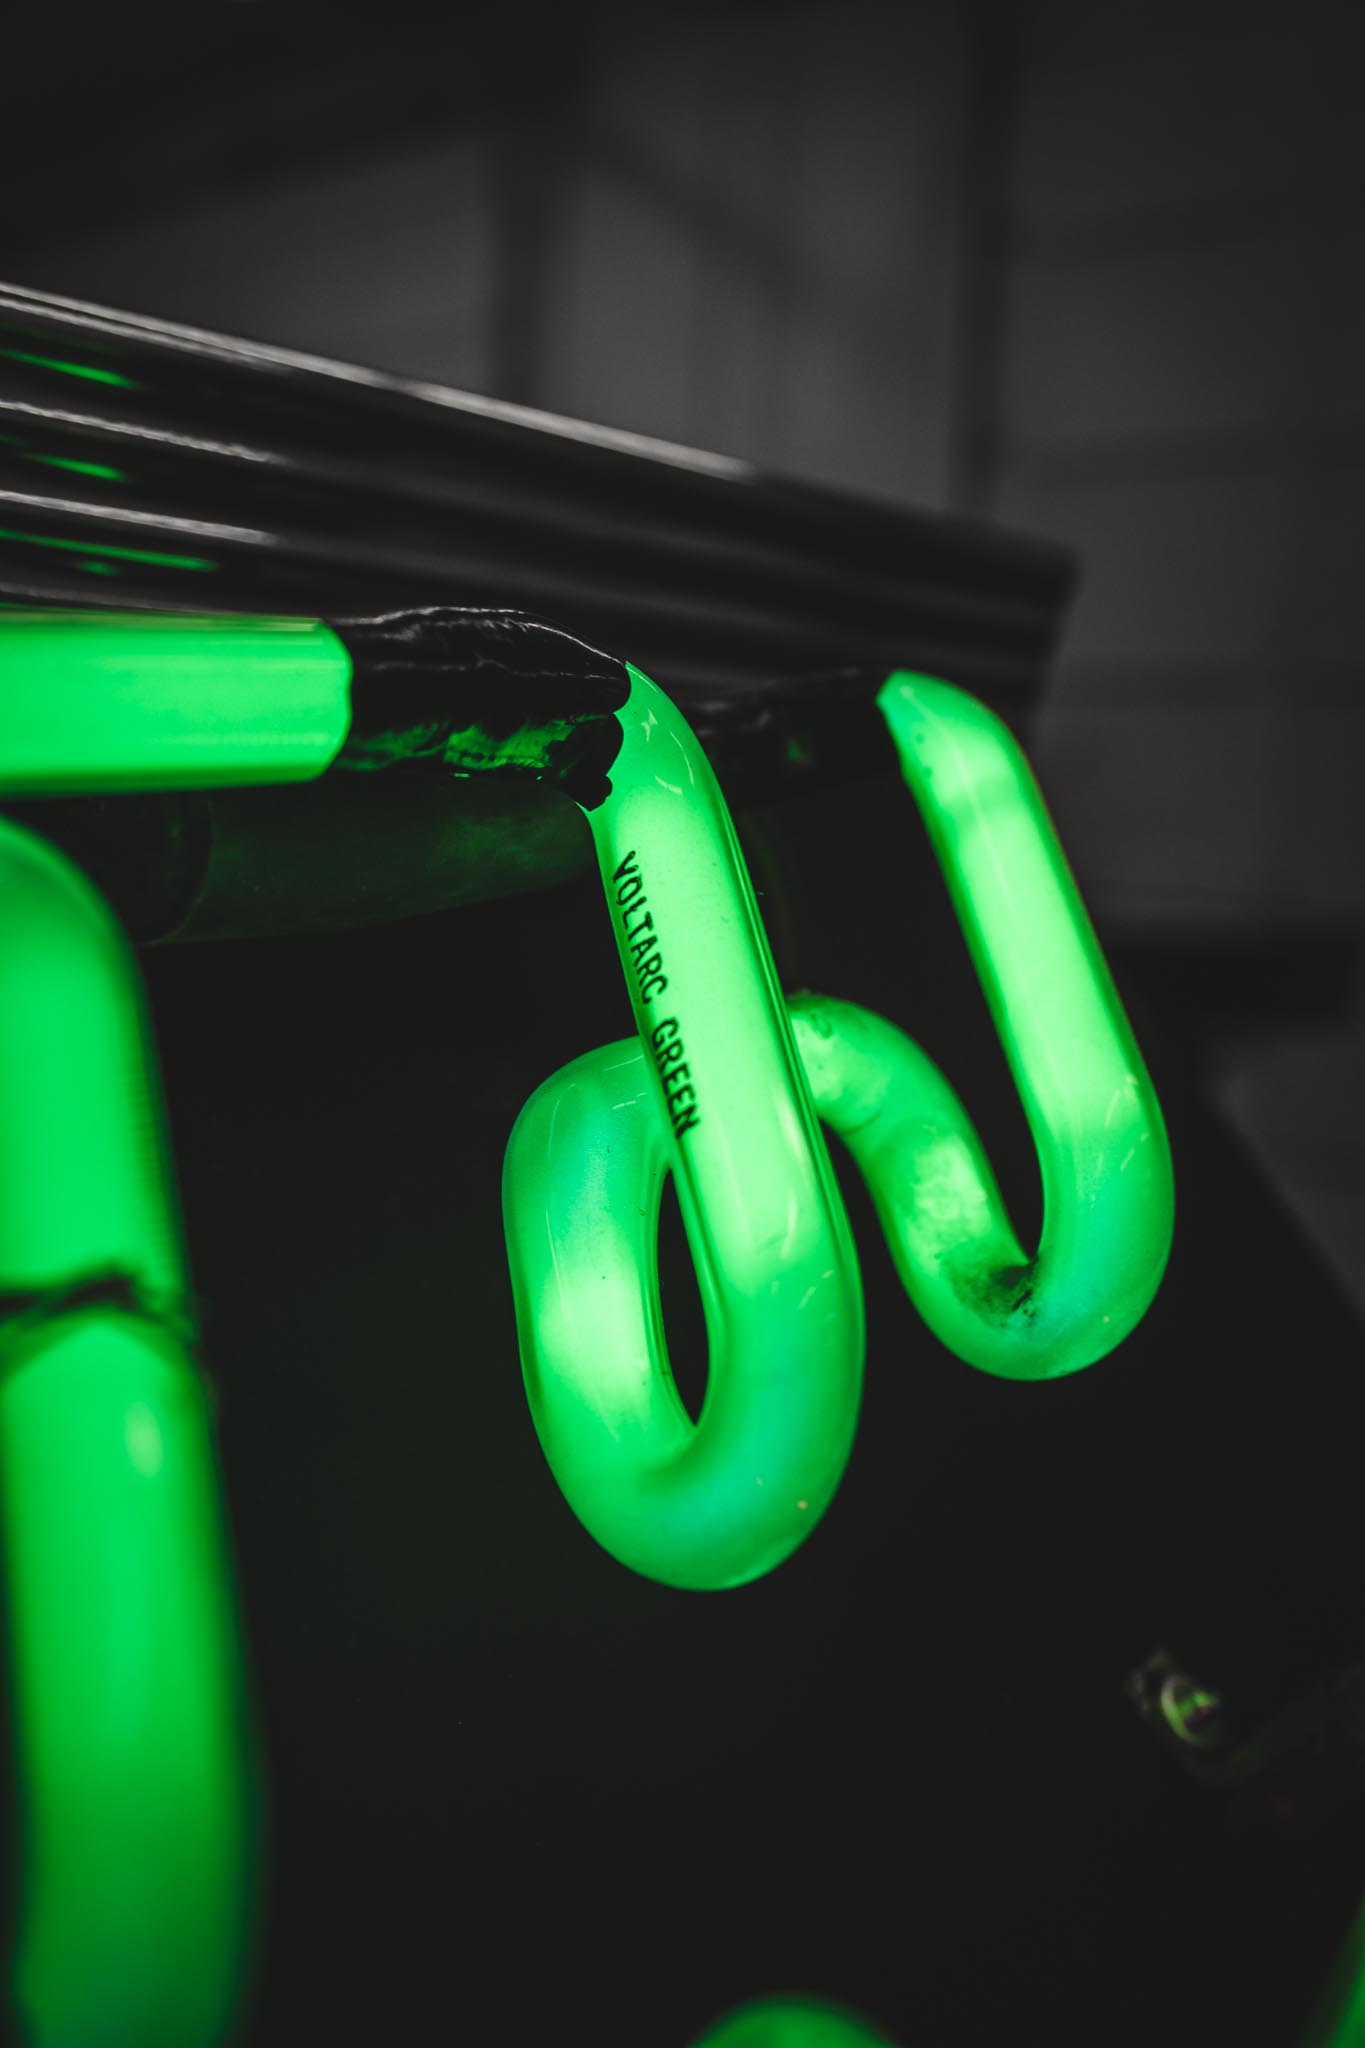 zenith-radio-green-neon-closeup